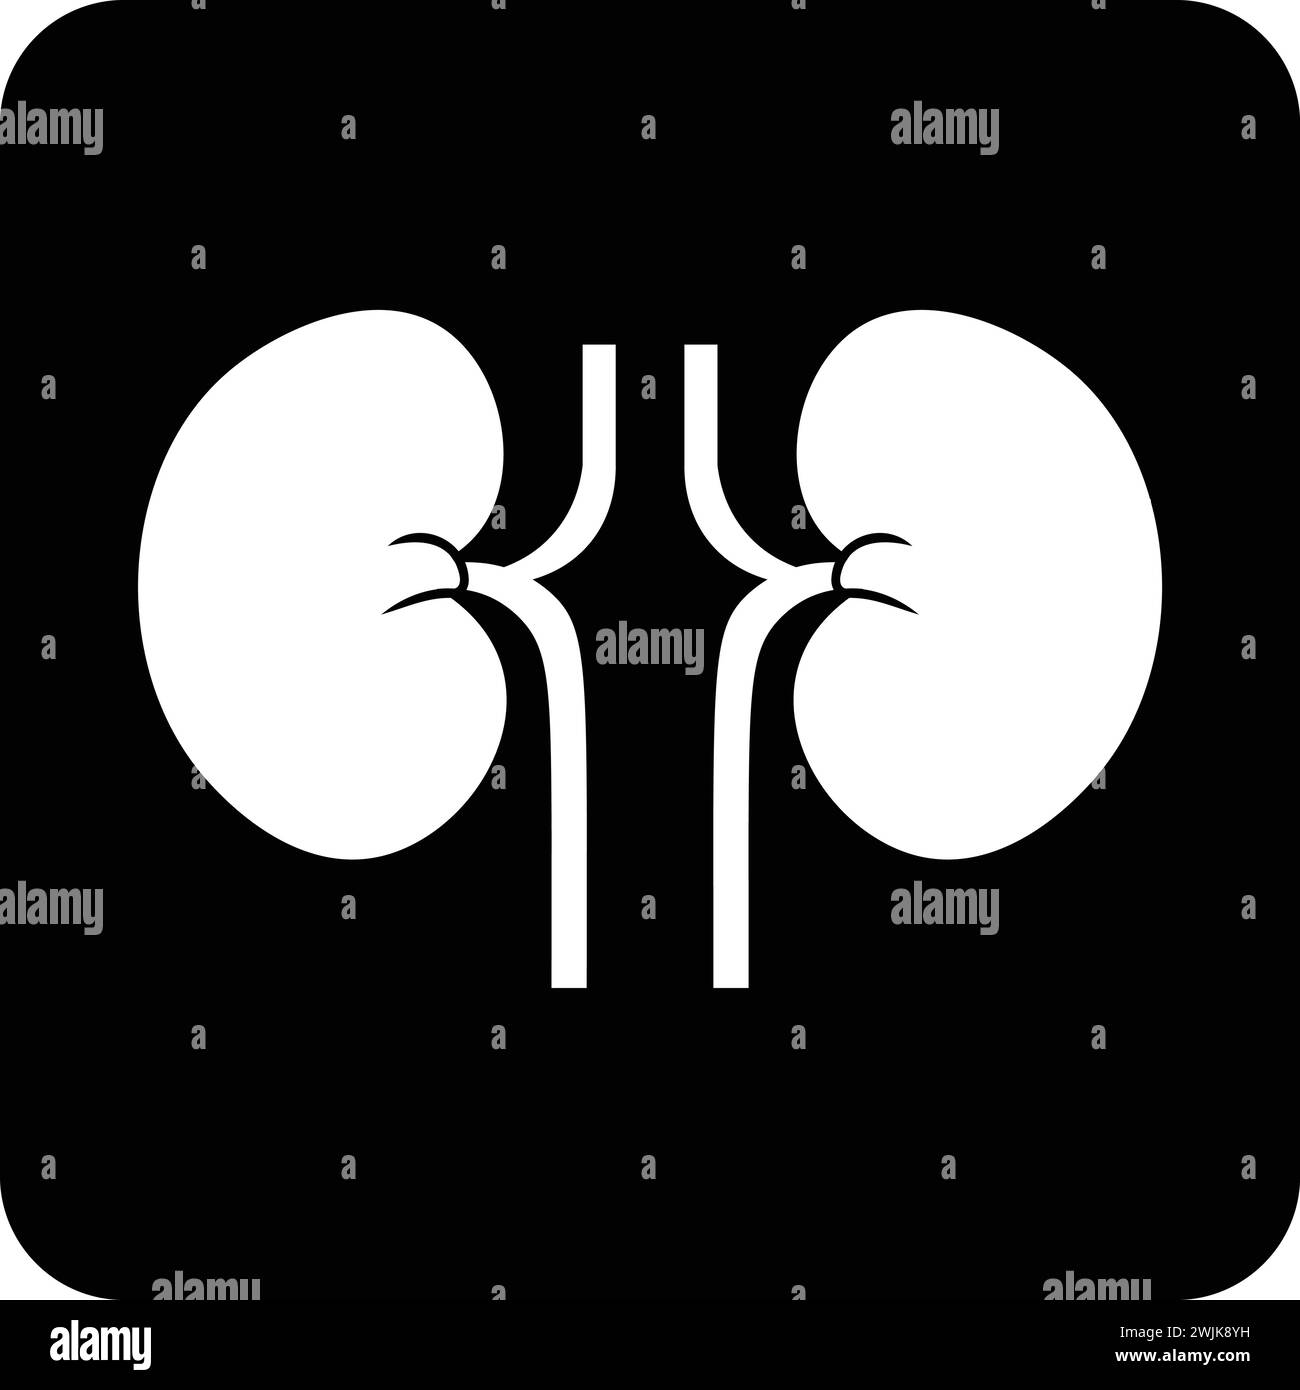 Kidney icon black and white fllat vector illustration Stock Vector